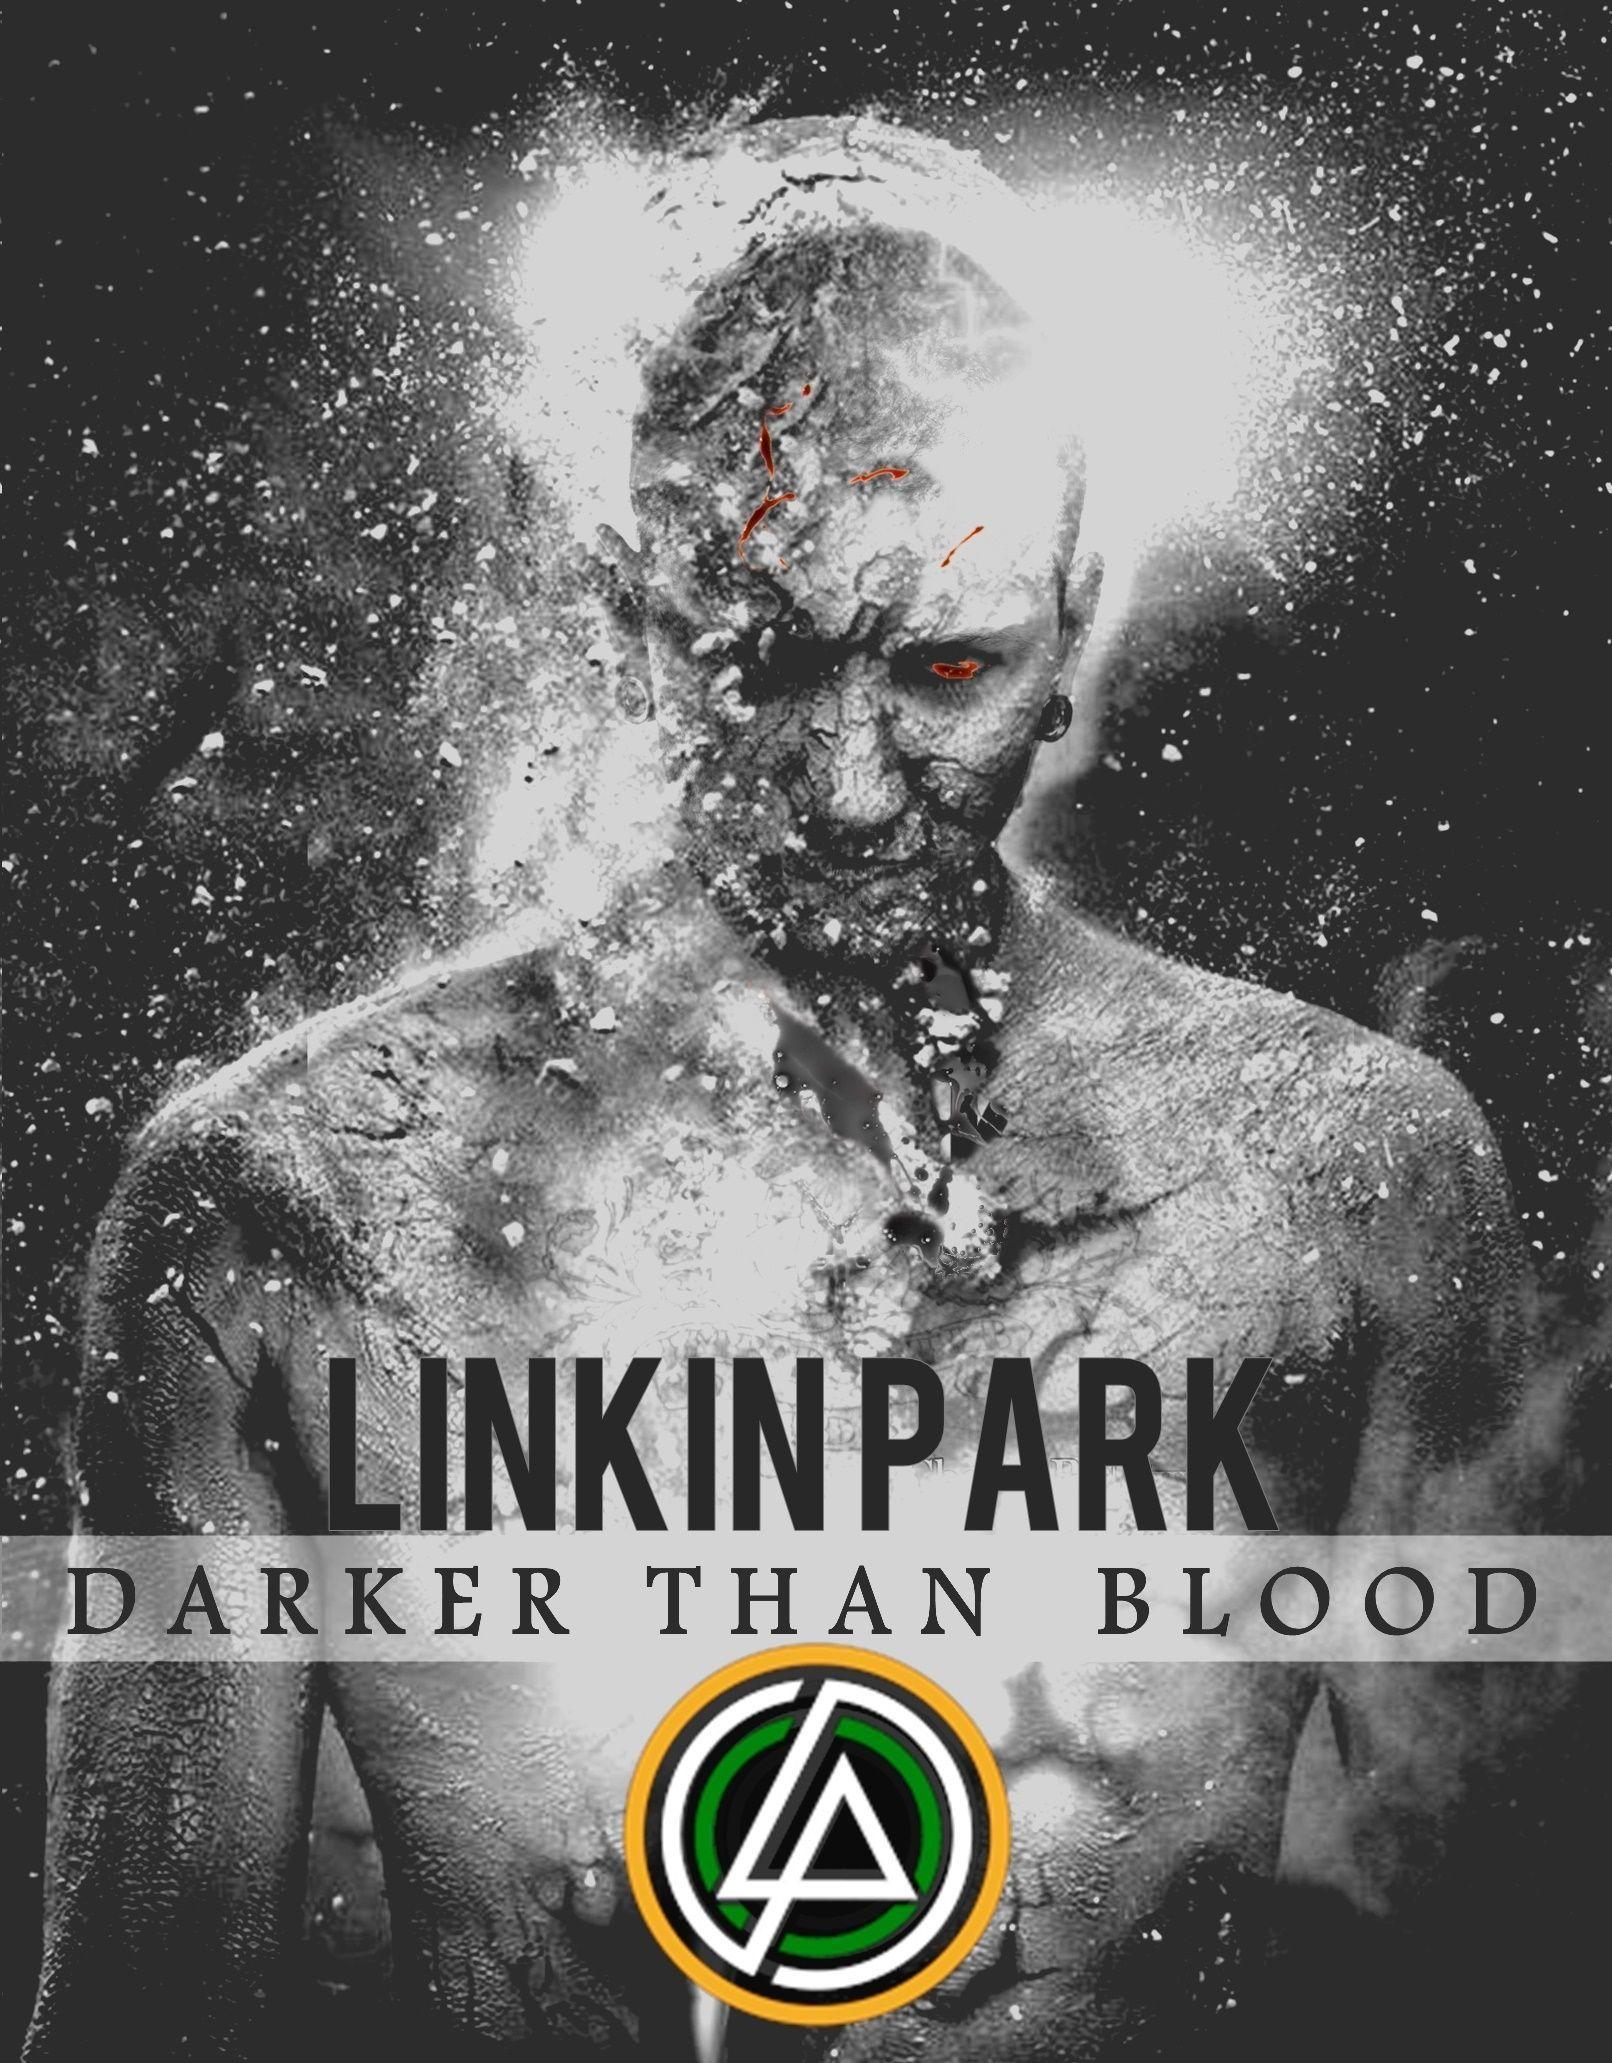 Steve Aoki&;s Darker than blood Feat Linkin Park